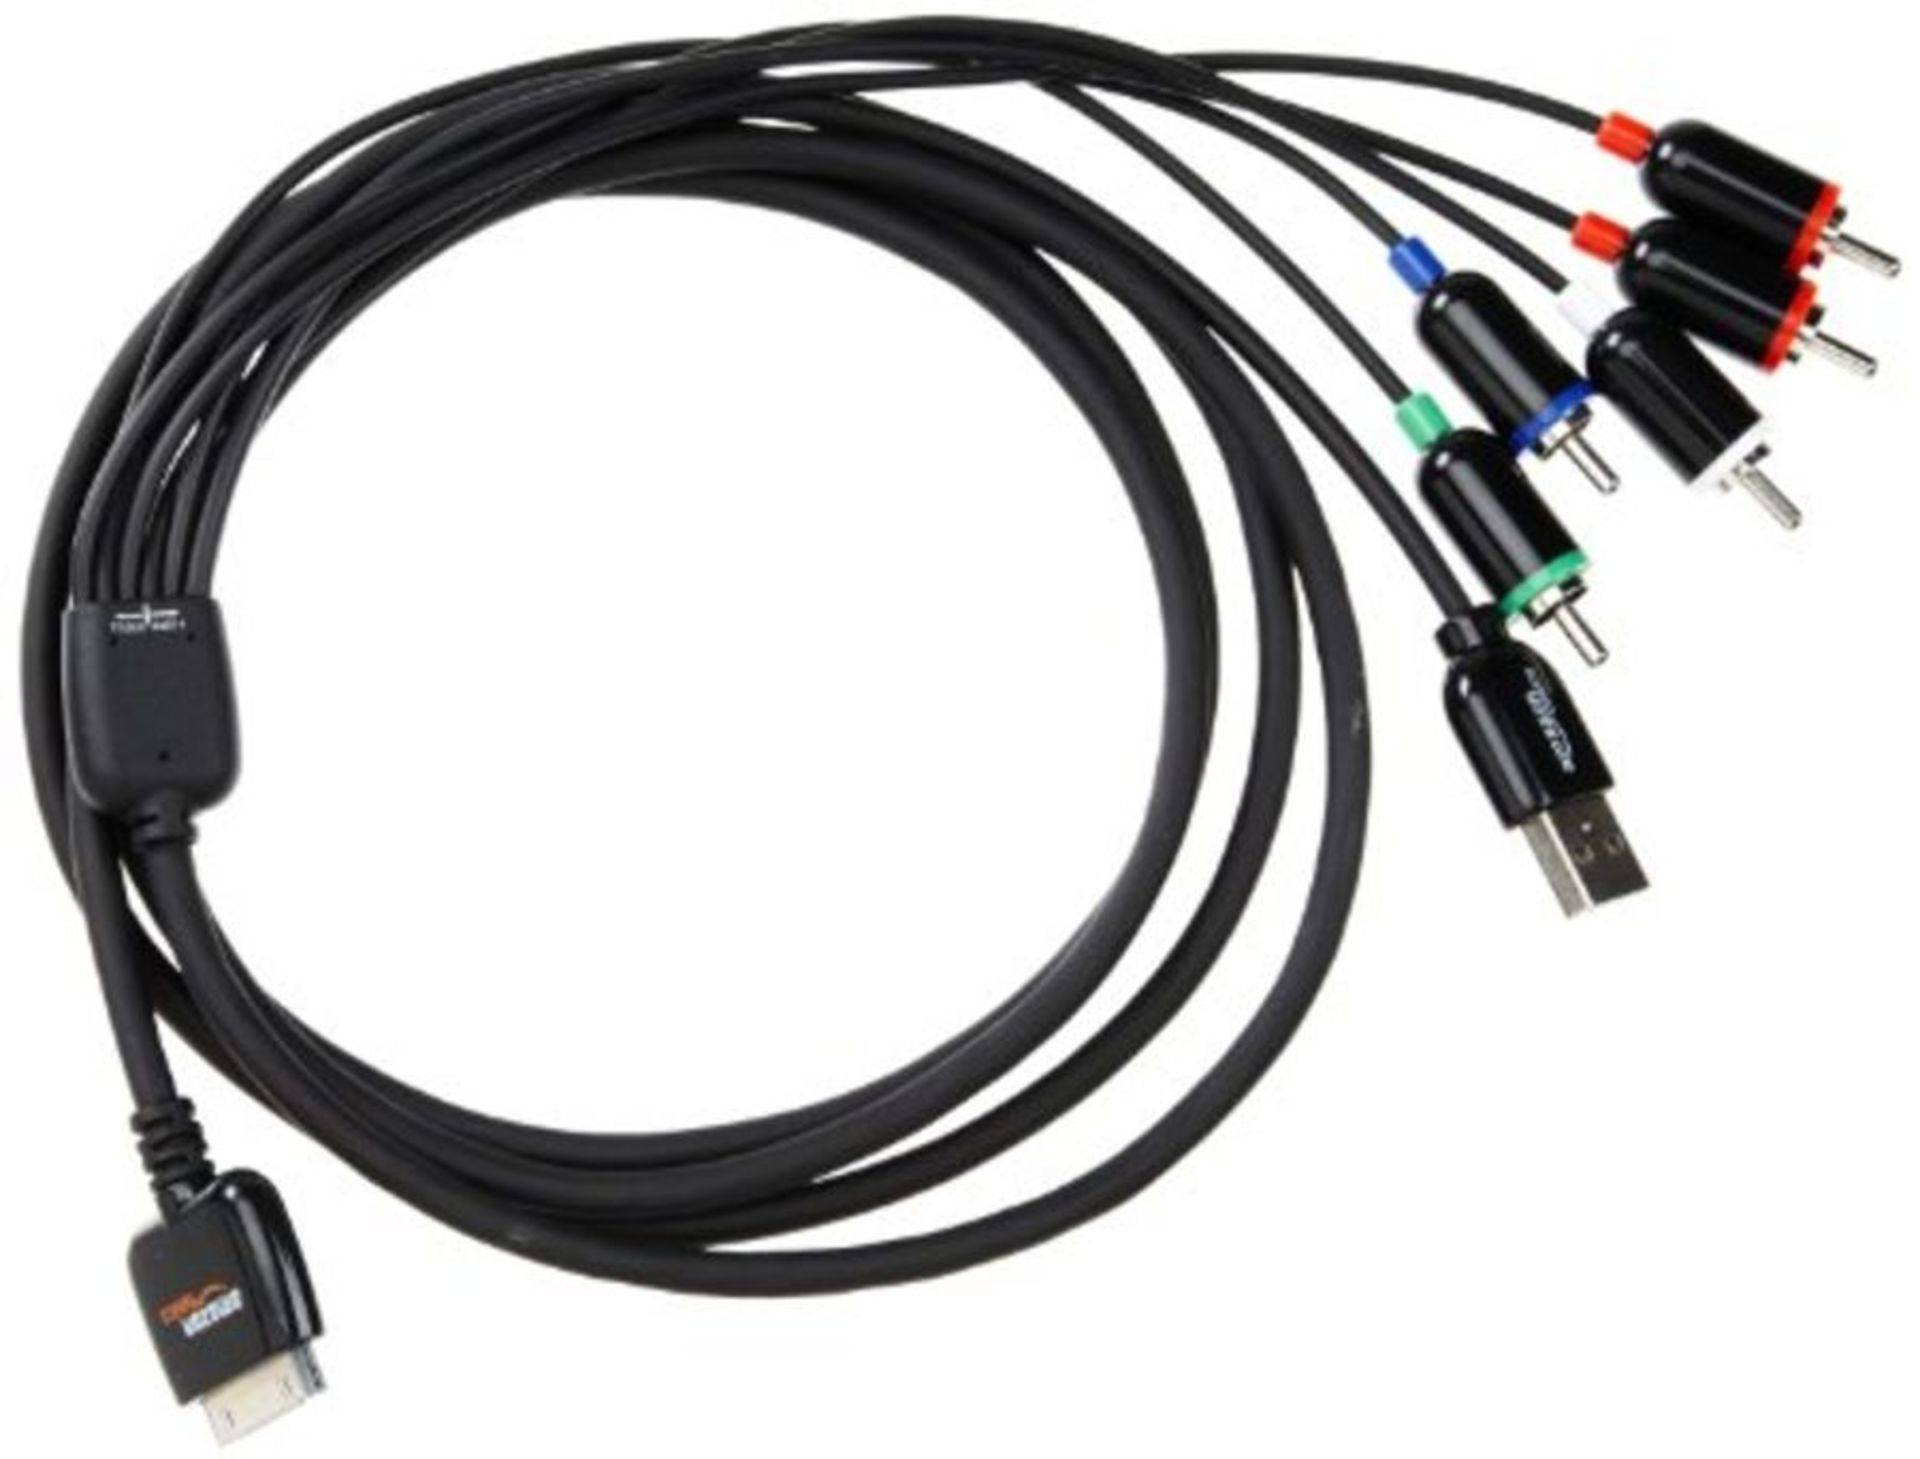 Amazon Basics Component AV Cable for Apple iPhone iPad and iPod 2 m / 6.5 Feet Black